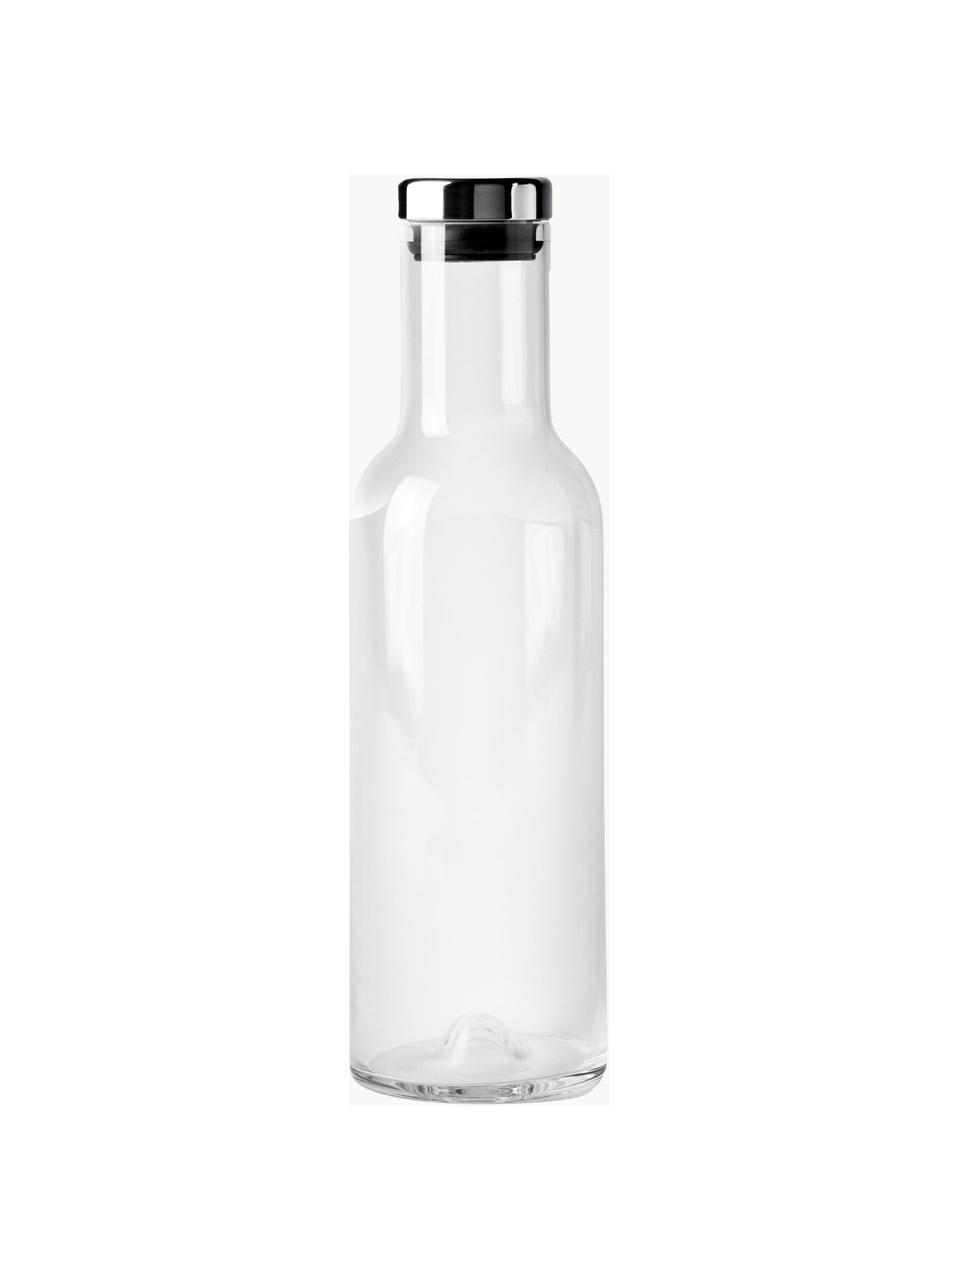 Glazen karaf Deluxe met deksel, 1 L, Mondgeblazen glas, siliconen, Transparant, zwart, 1 L